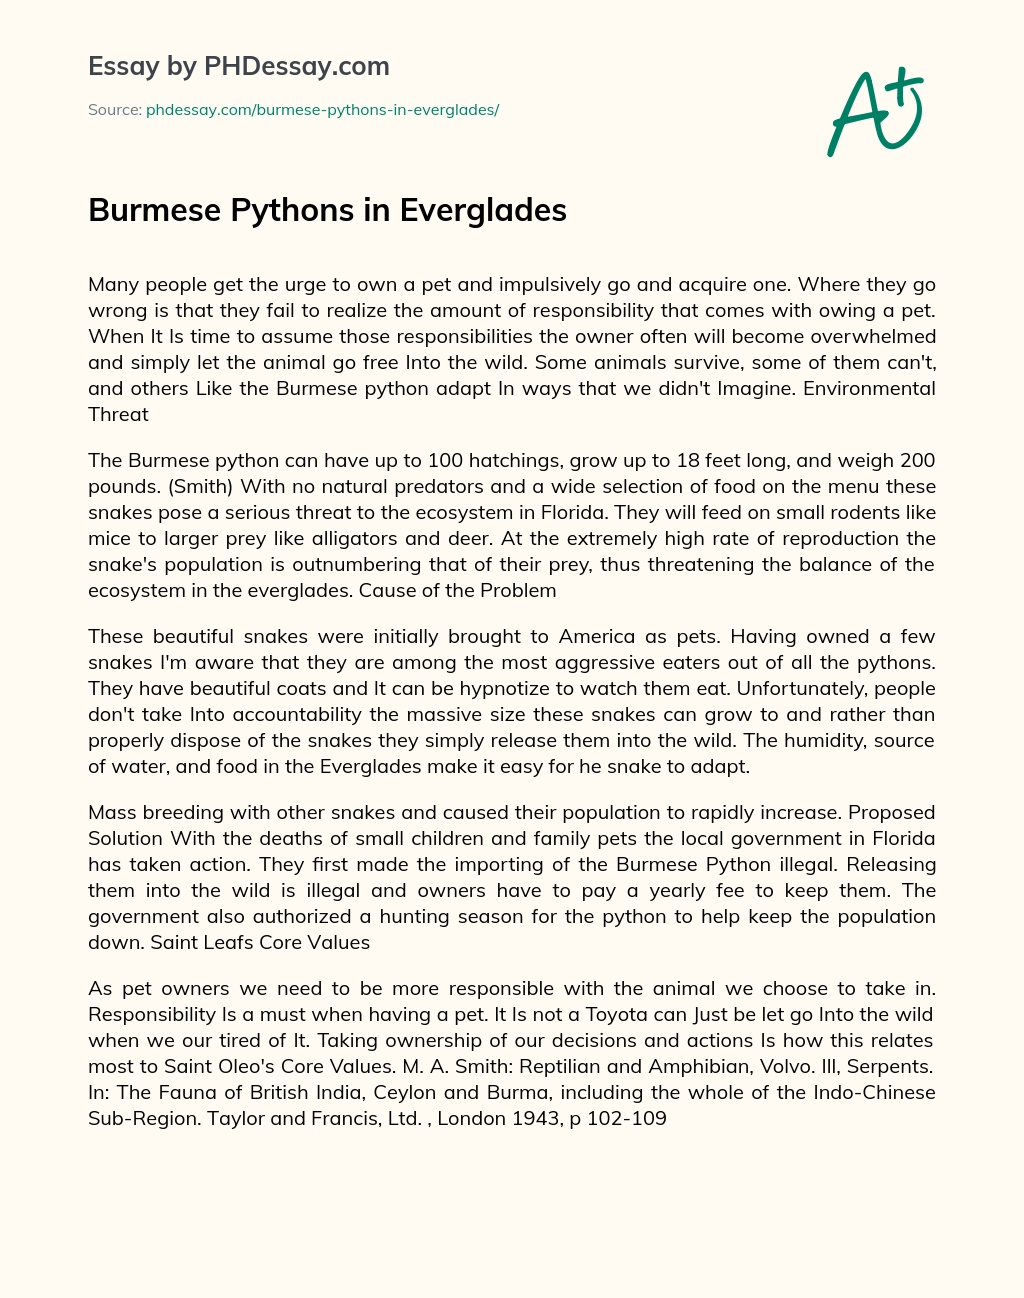 Burmese Pythons in Everglades essay